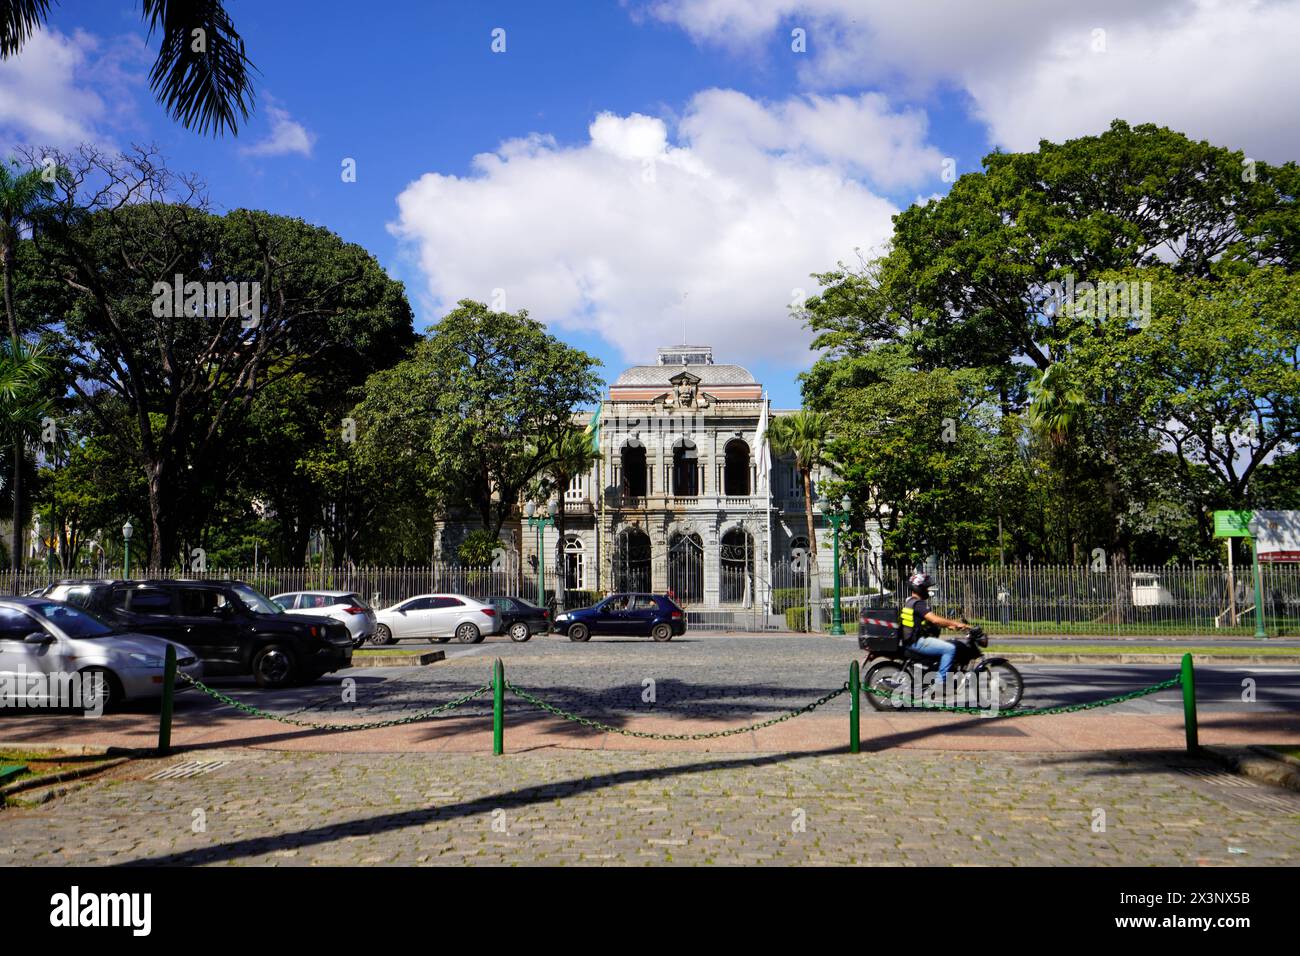 Palacio da Liberdade palace in Praca da Liberdade square in Belo Horizonte, Minas Gerais, Brazil Stock Photo